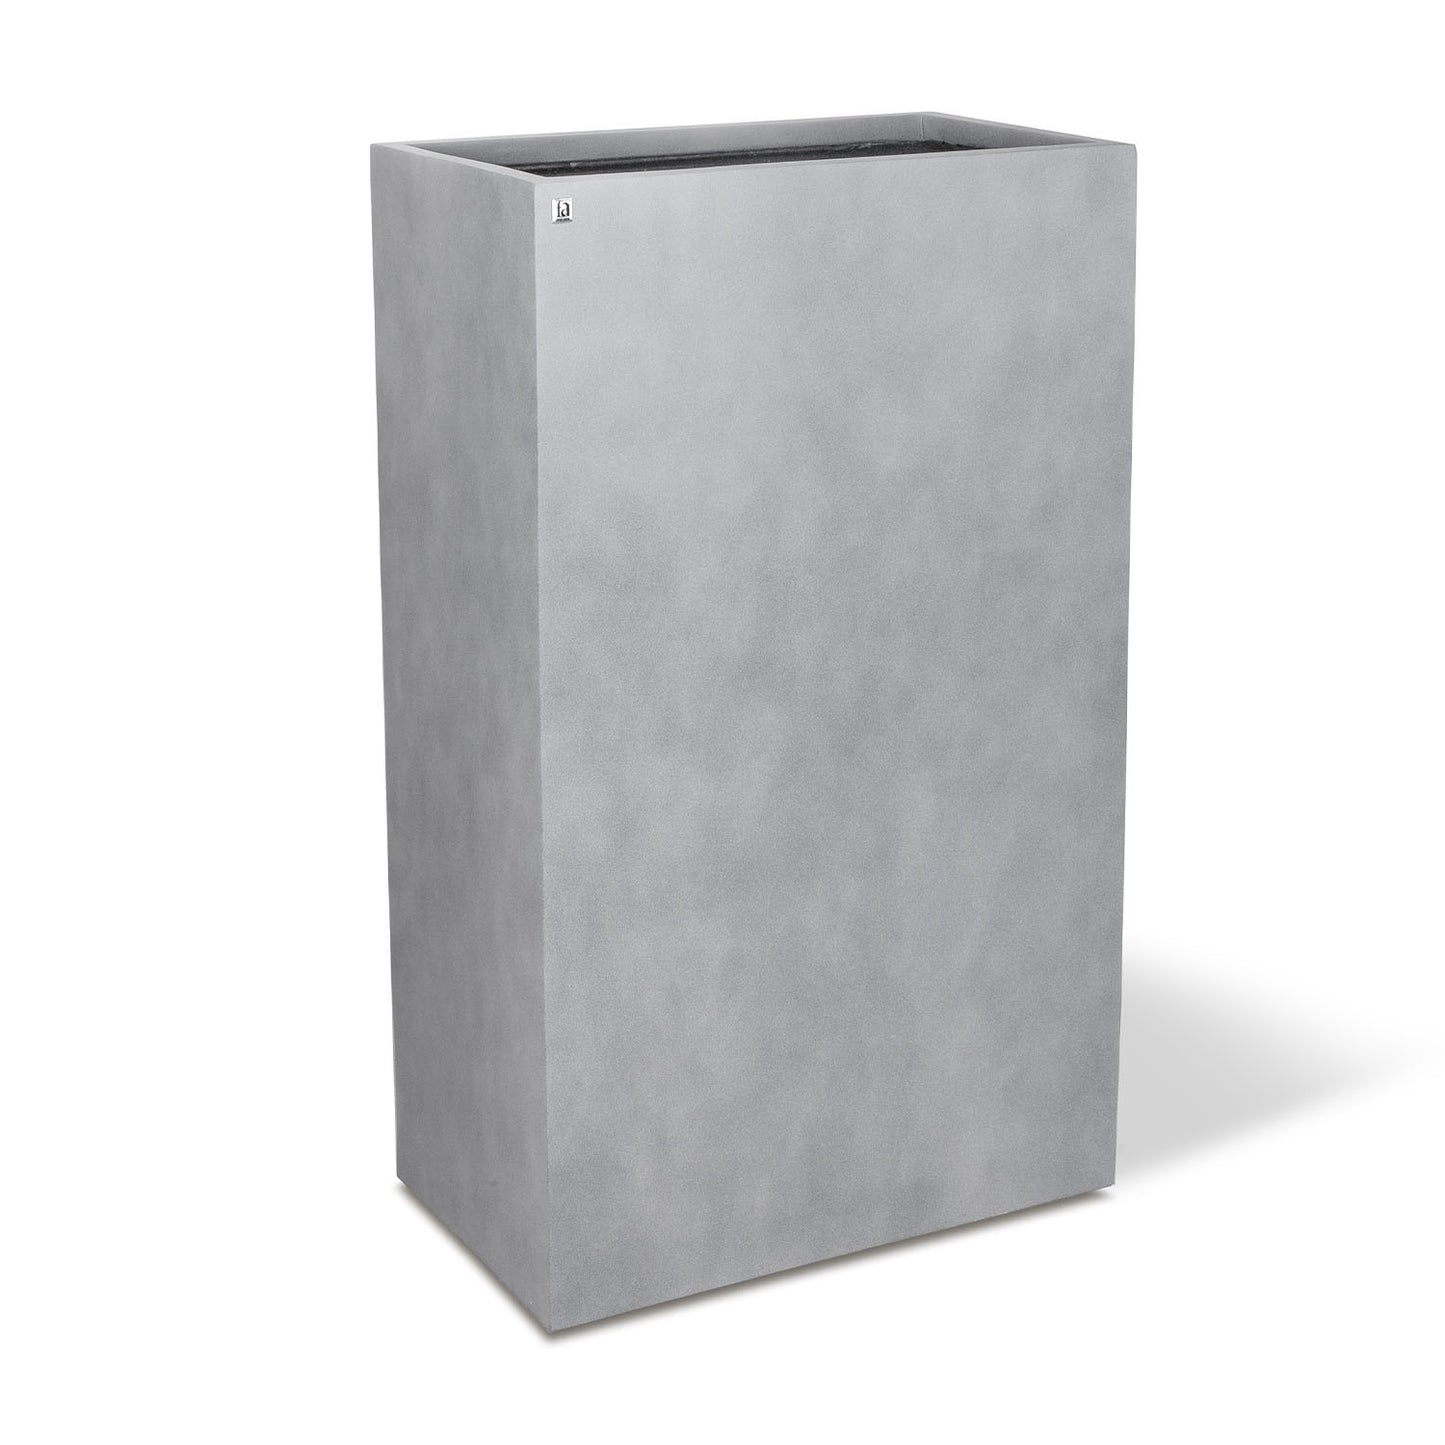 Division Lite Raumteiler mit Rollenaufnahme, 60 x 35 x 100 cm, concrete steingrau